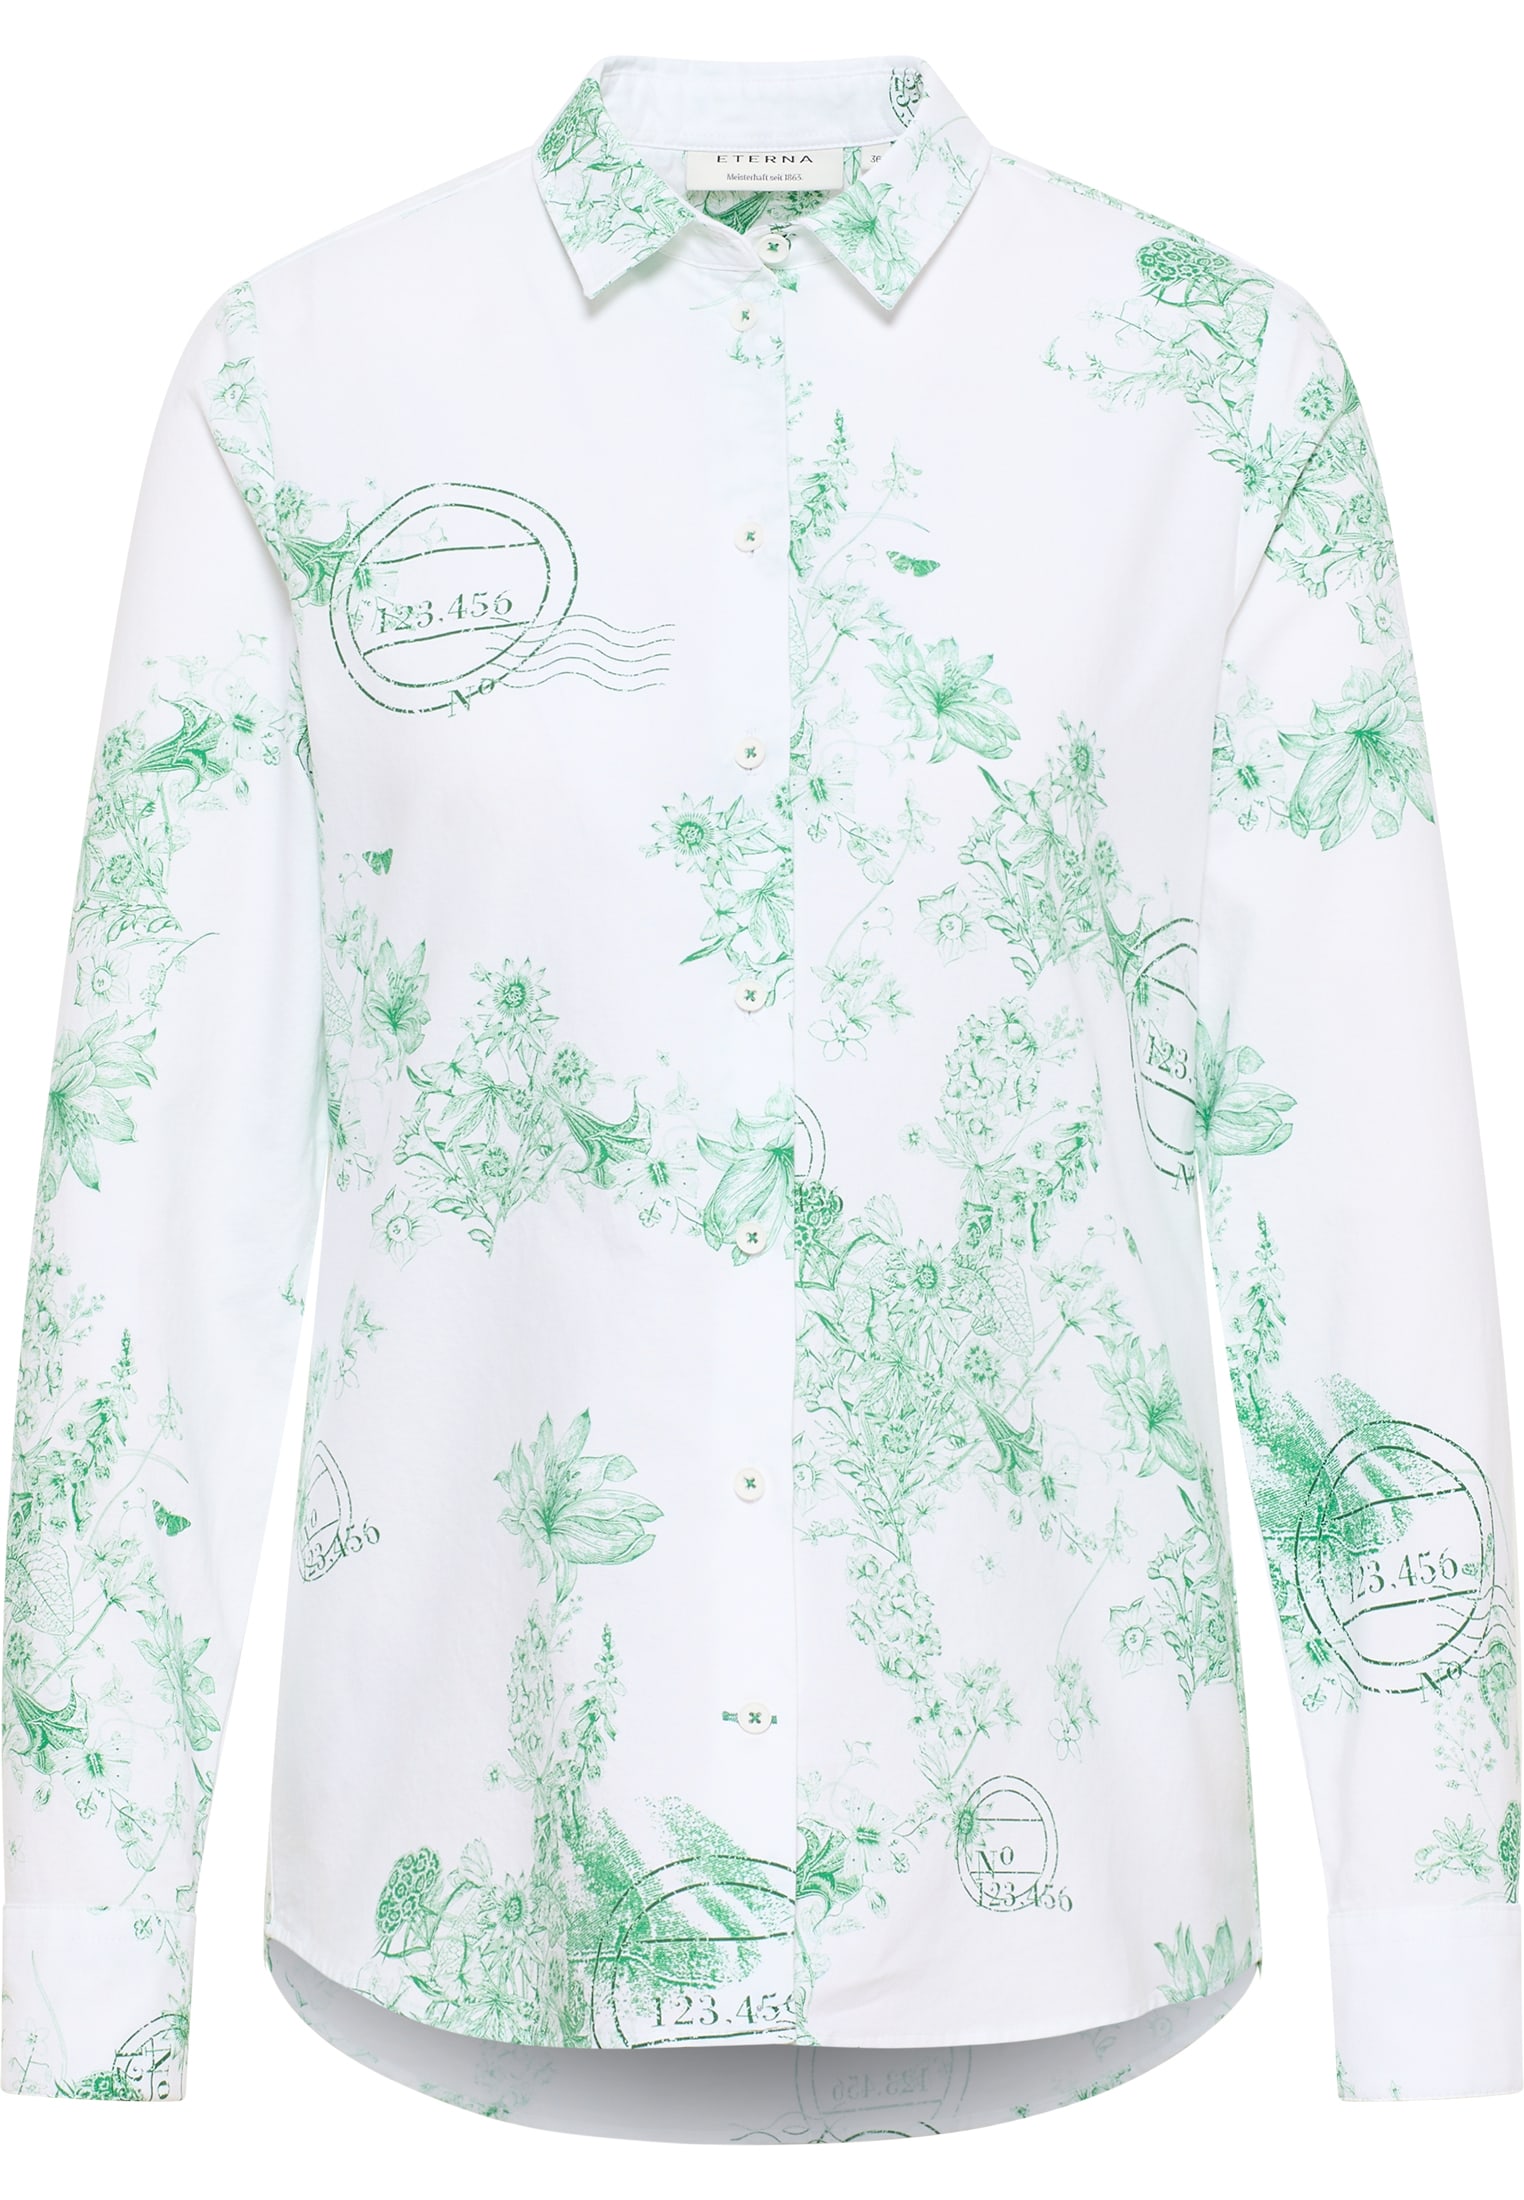 Oxford Shirt Bluse in grün bedruckt | grün | Langarm | 44 |  2BL04169-04-01-44-1/1